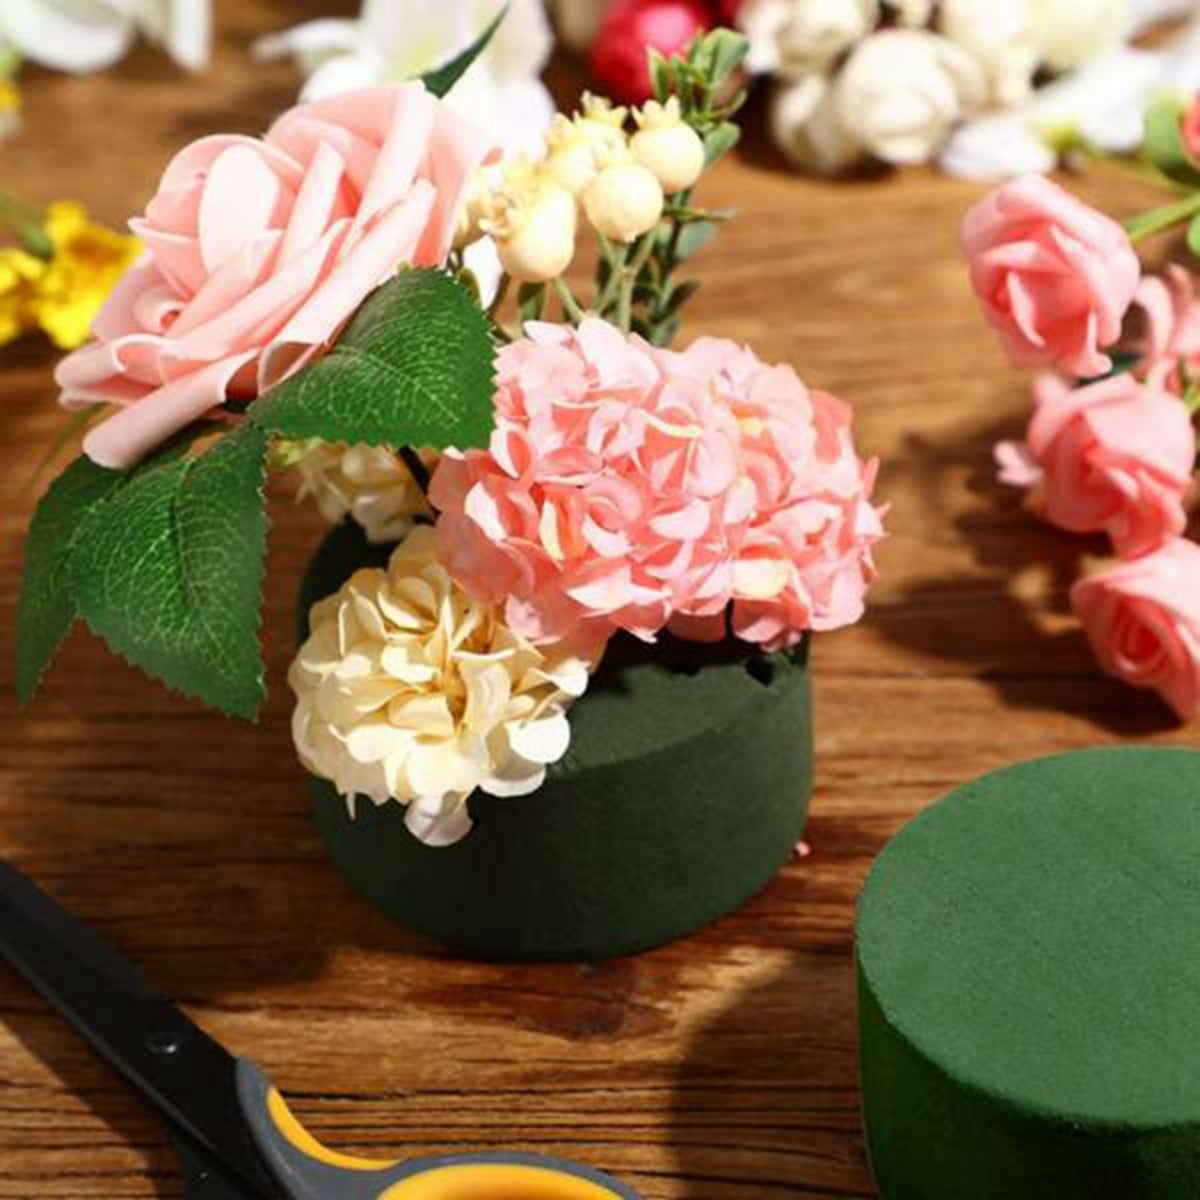 Karenhi 36 Pcs Large Size 6.3 Inch Floral Foam Round Bowls for Flower  Arrangements Round Floral Supplies Flower Foam with Bowl Kit with Floral  Foam